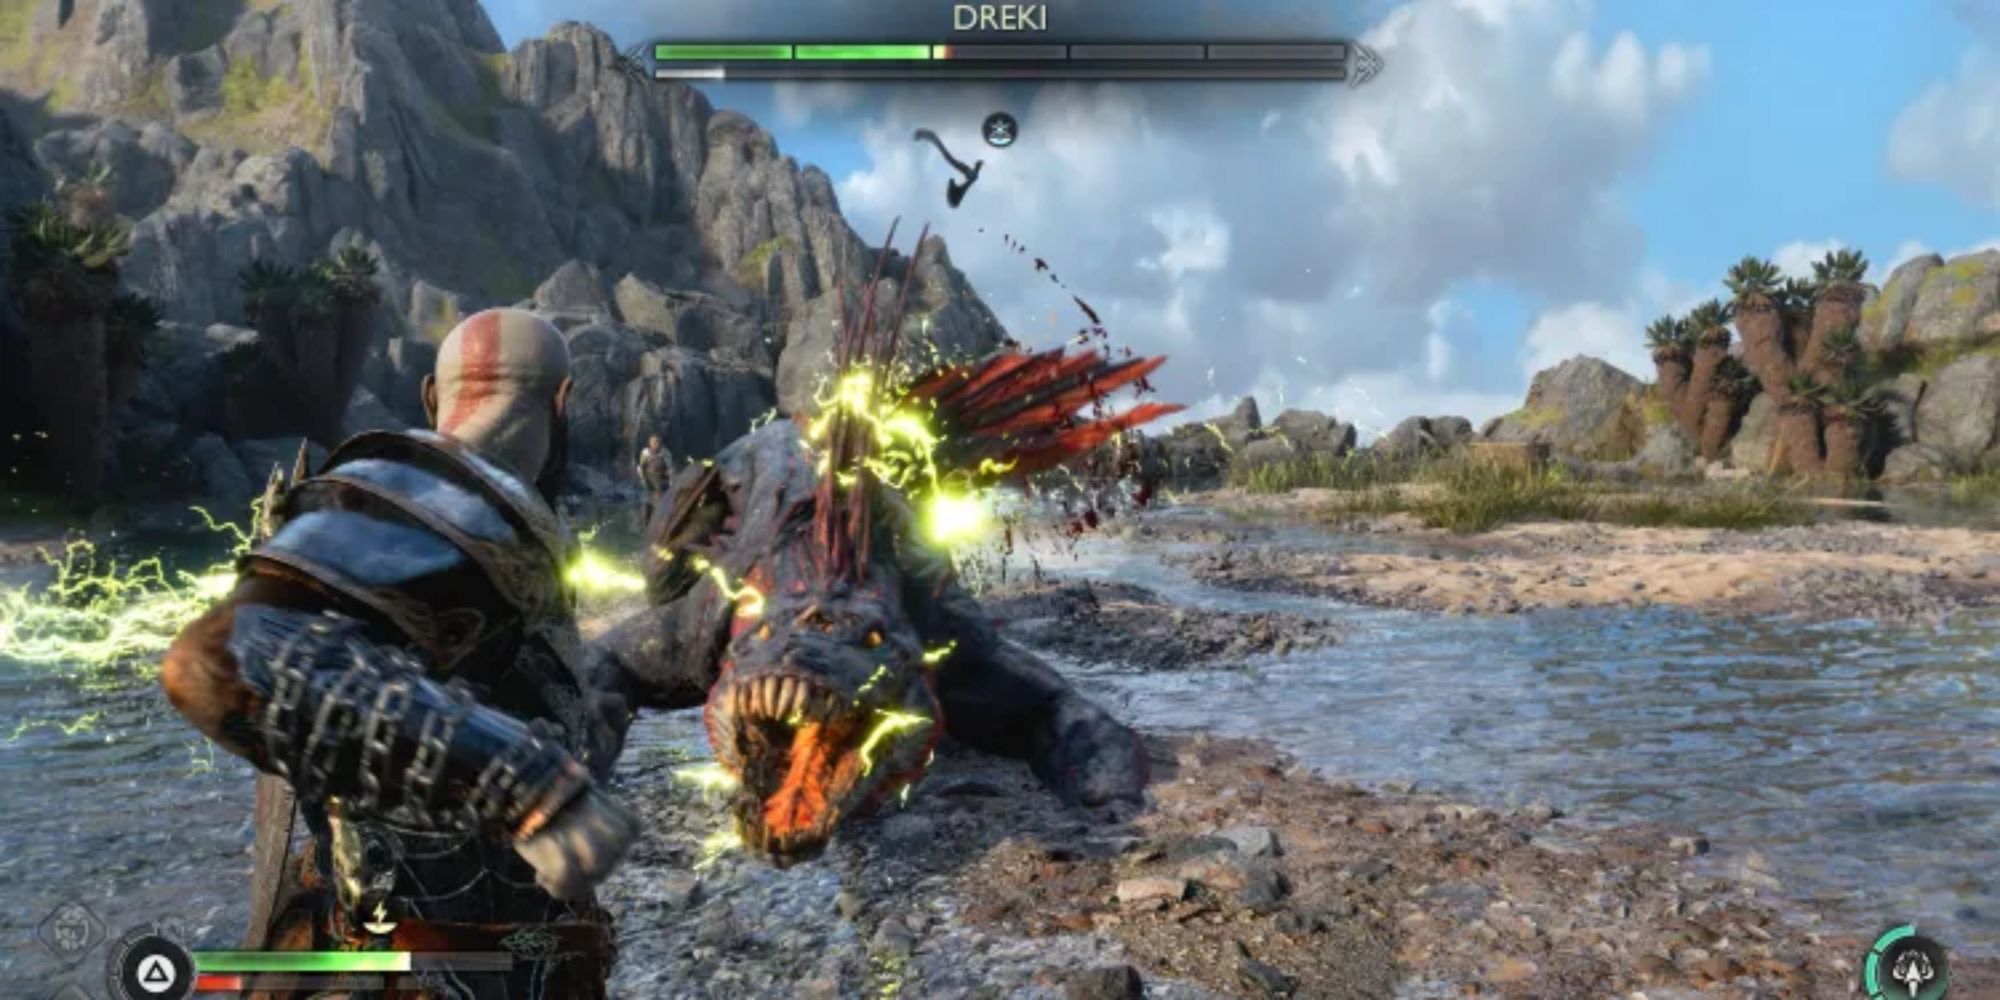 God Of War Ragnarok: How To Kill The Ormr At Dragon Beach